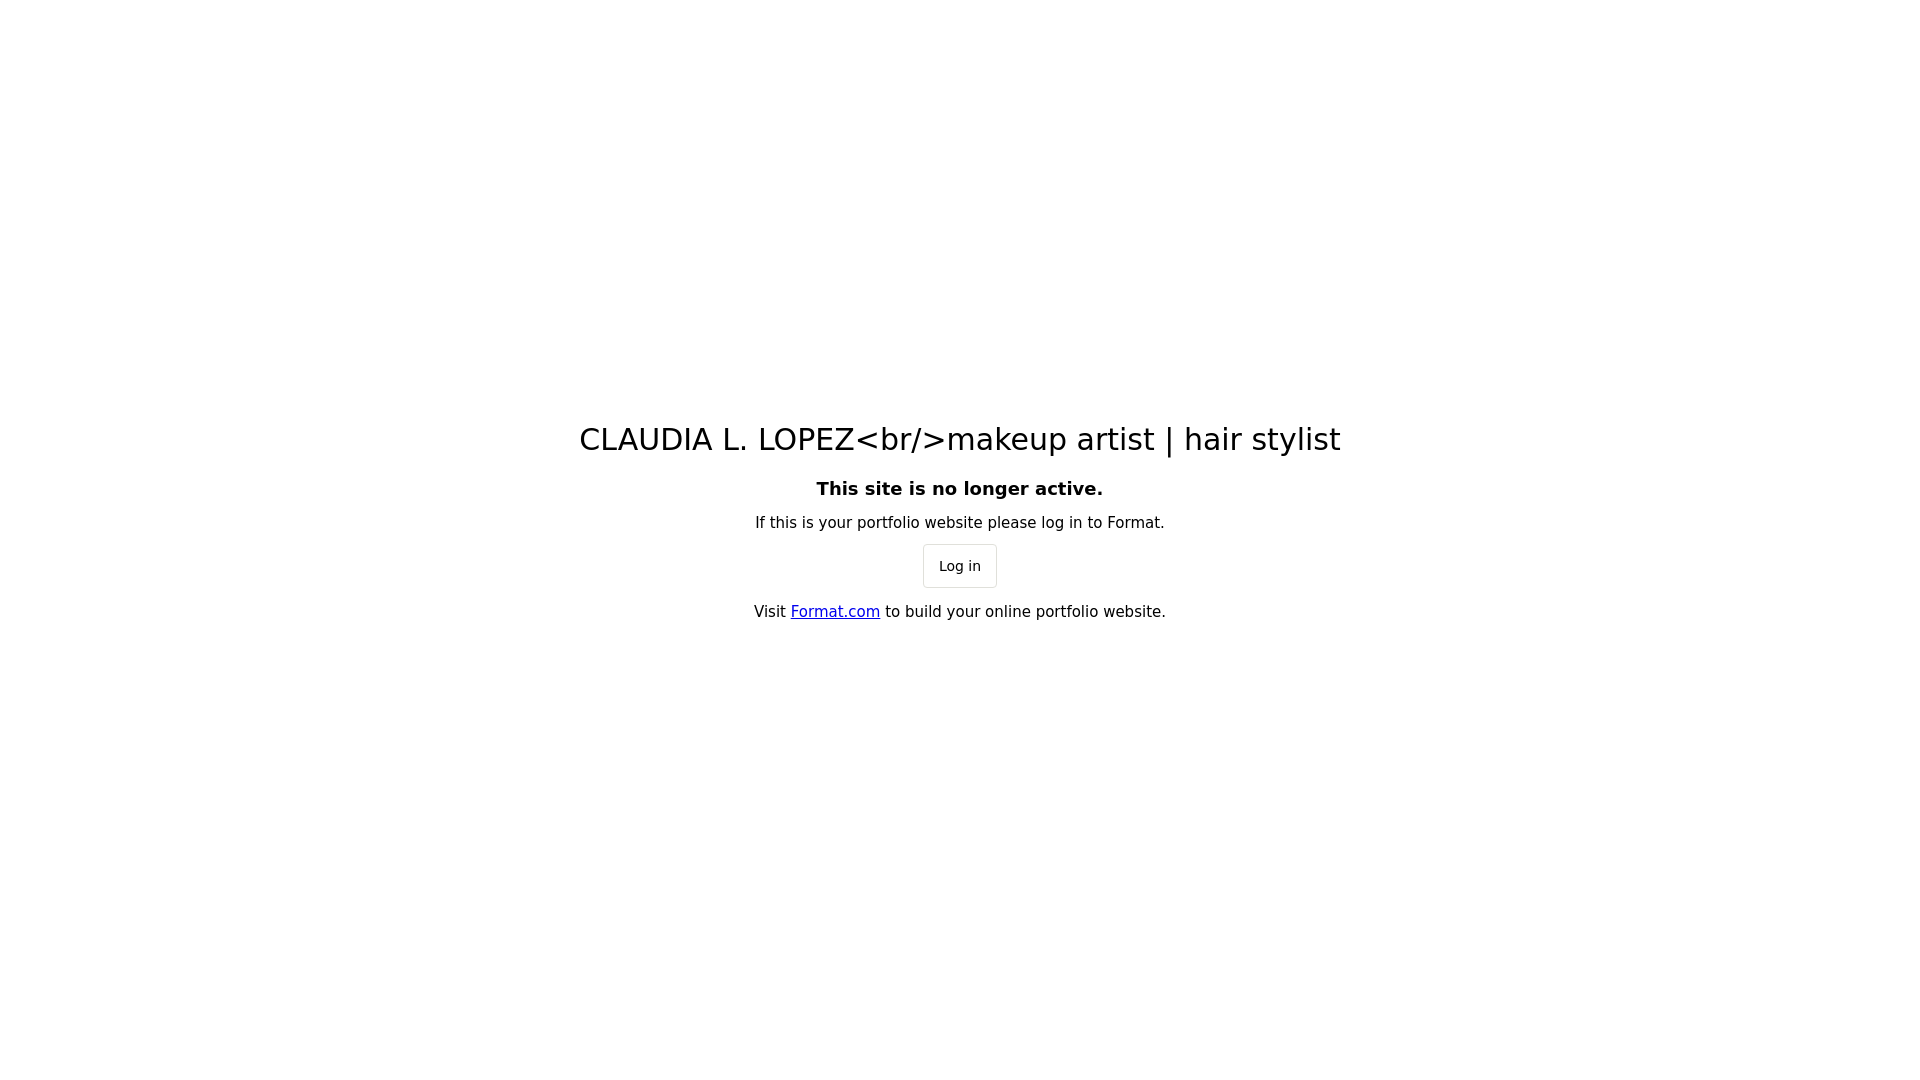 Claudia L. Lopez desktop